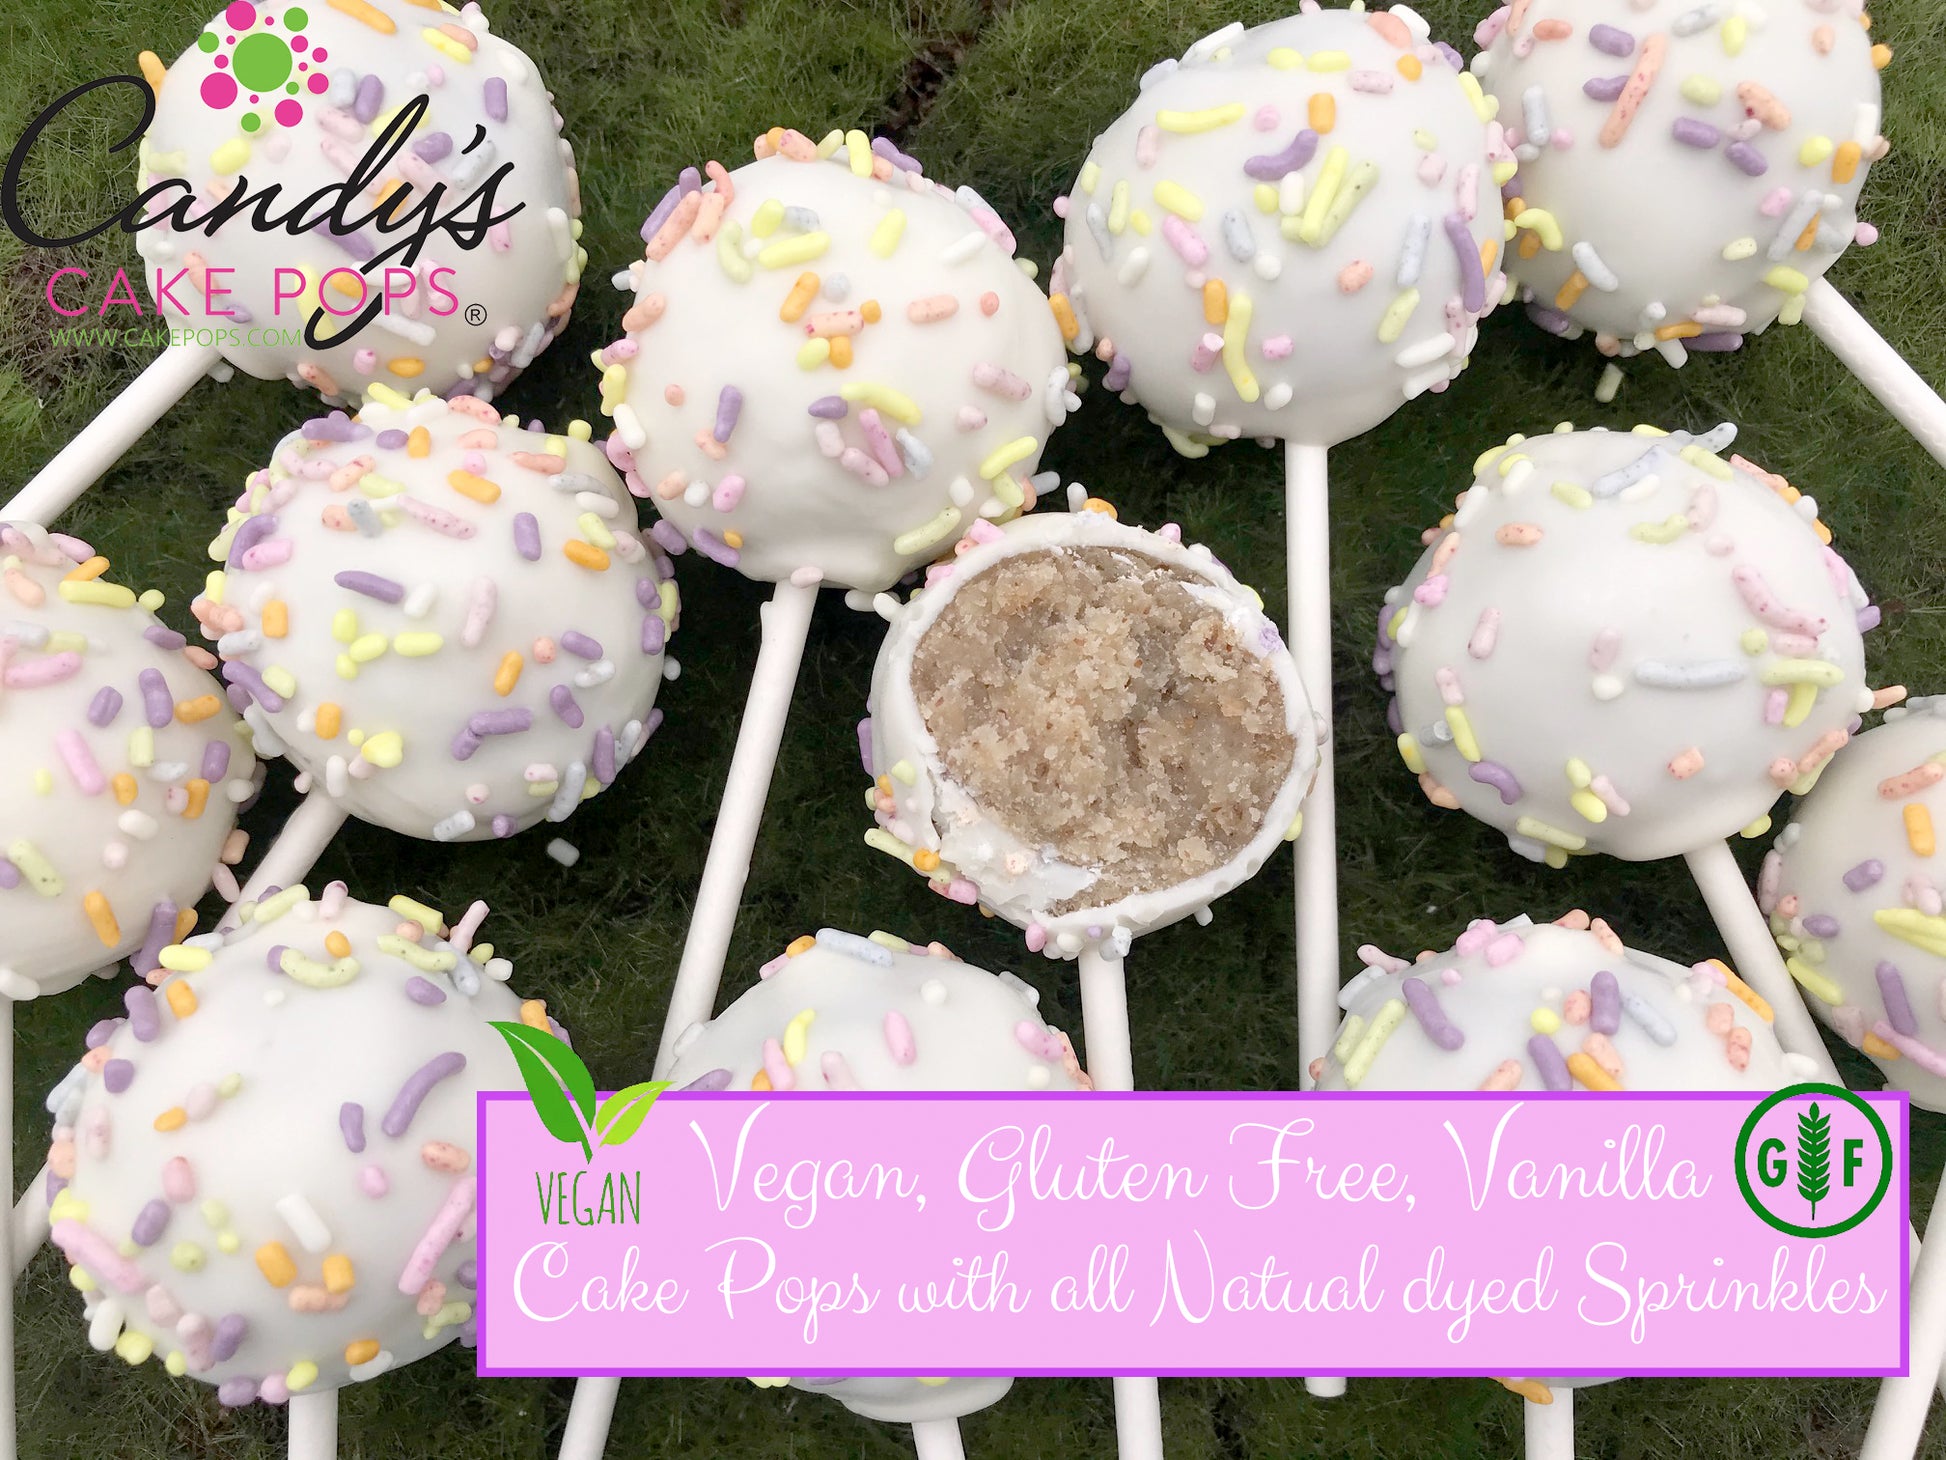 Vegan, Gluten Free, Vanilla Cake Pops w/ Naturally Dyed Rainbow Sprinkles - Candy's Cake Pops